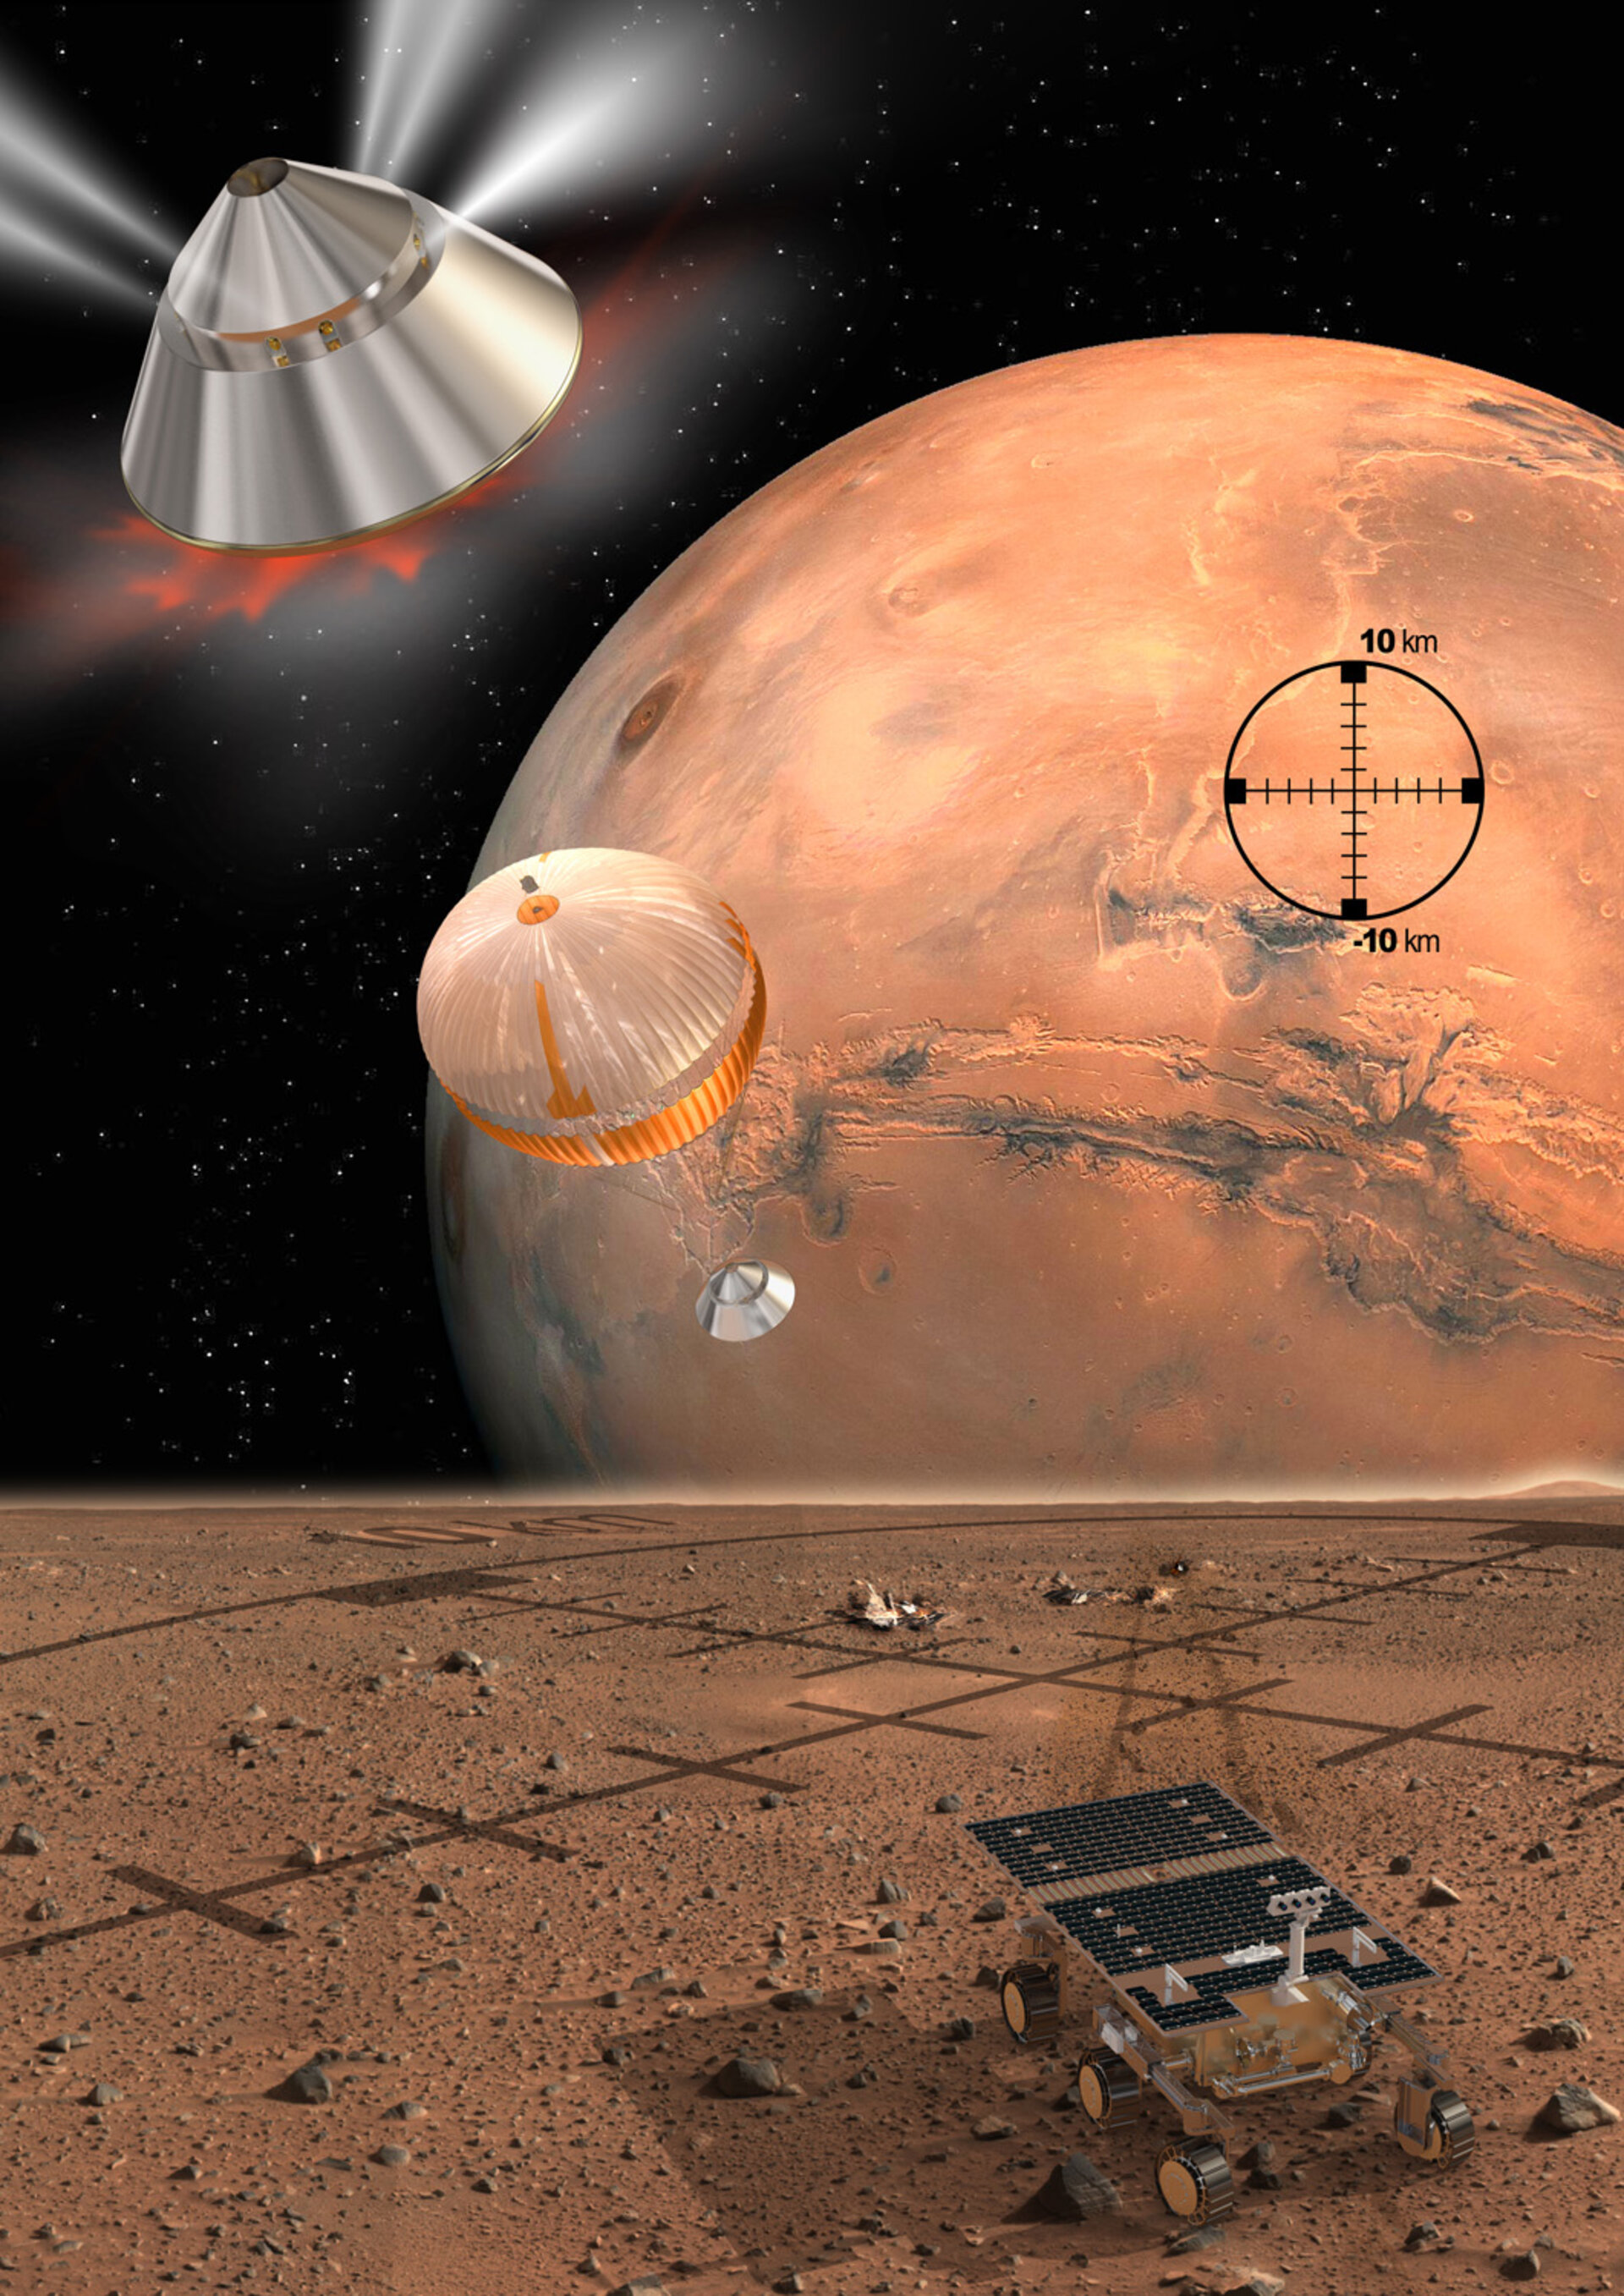 Mars Robotic Exploration Preparation (MREP) mission